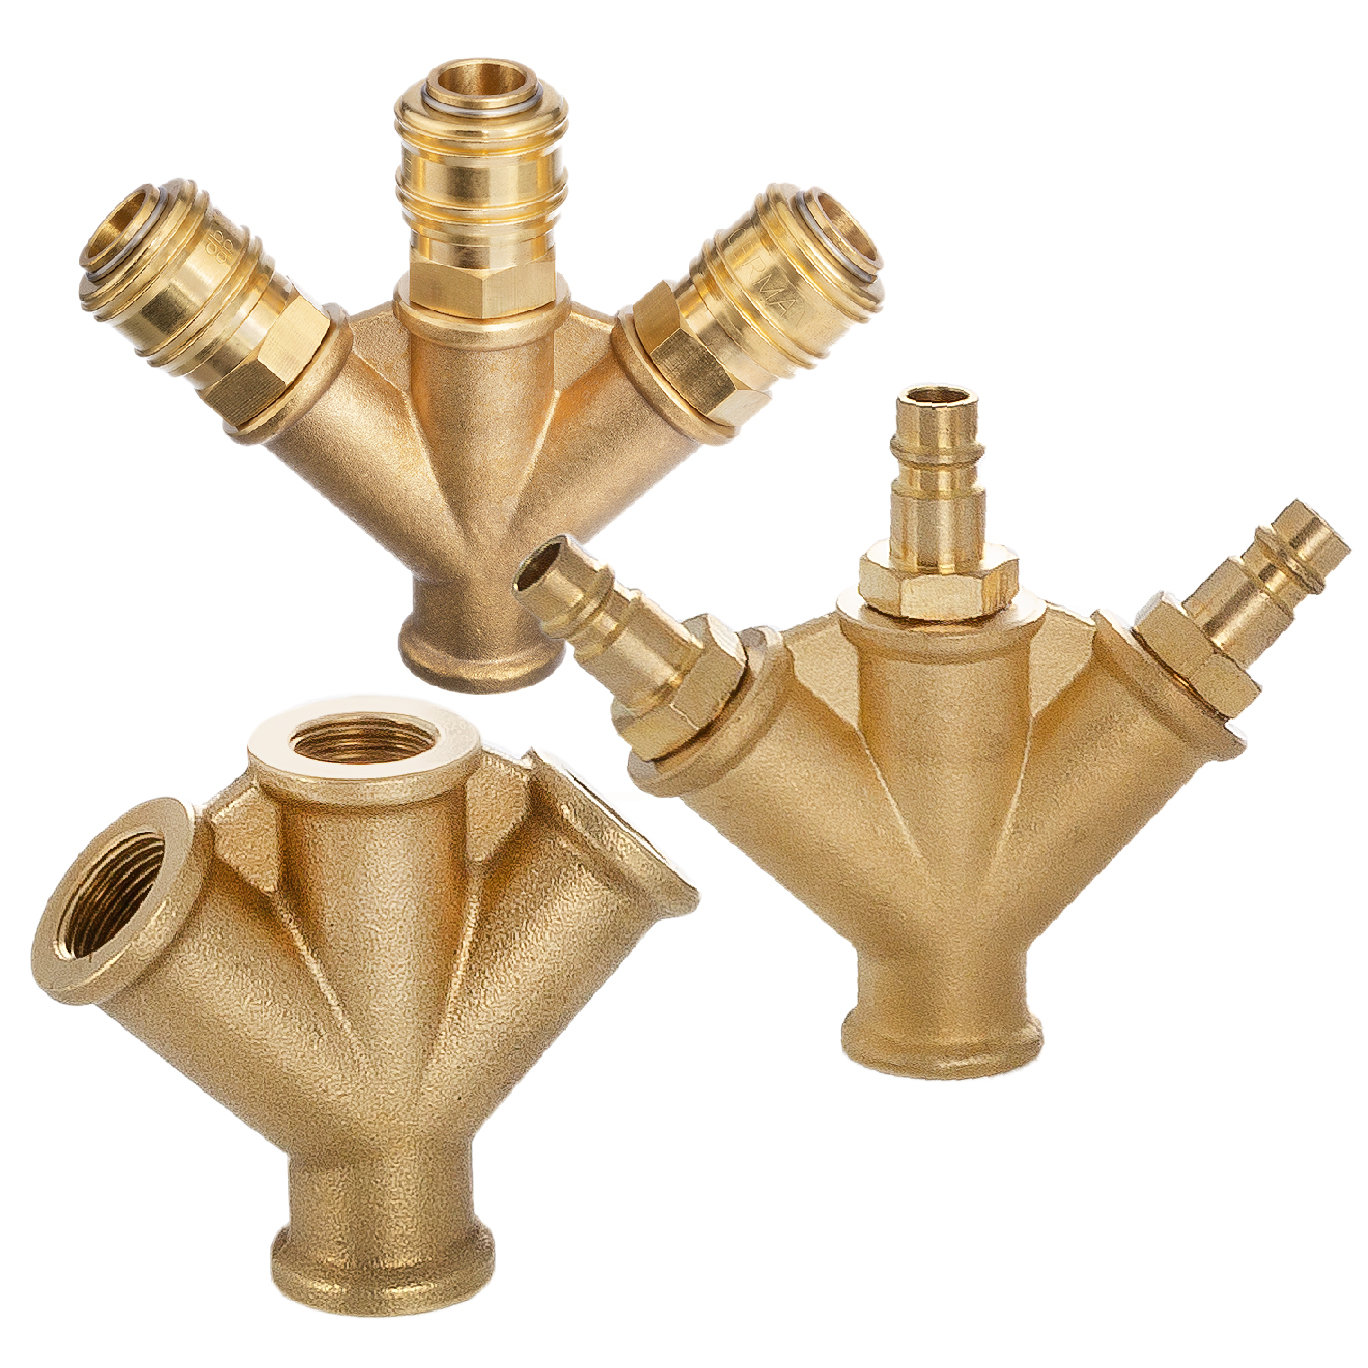 Brass coupling and plug nipple manifold